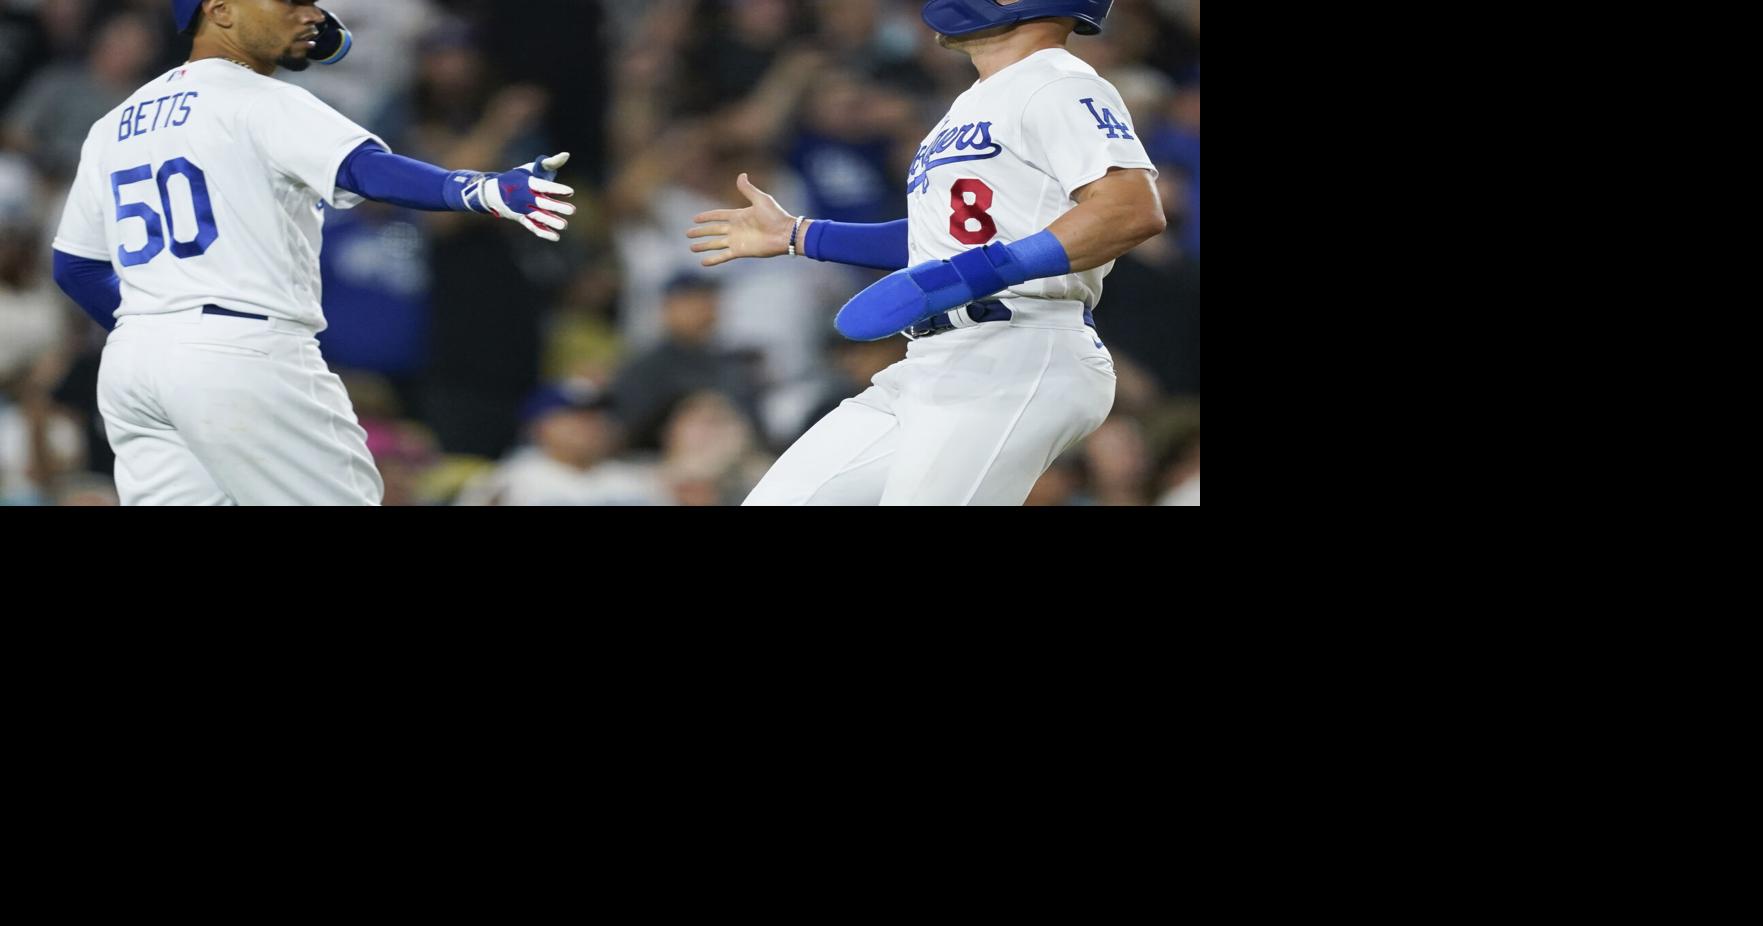 LITTLE LEAGUE BASEBALL: Rockies defeat Dodgers to win BD single A playoffs